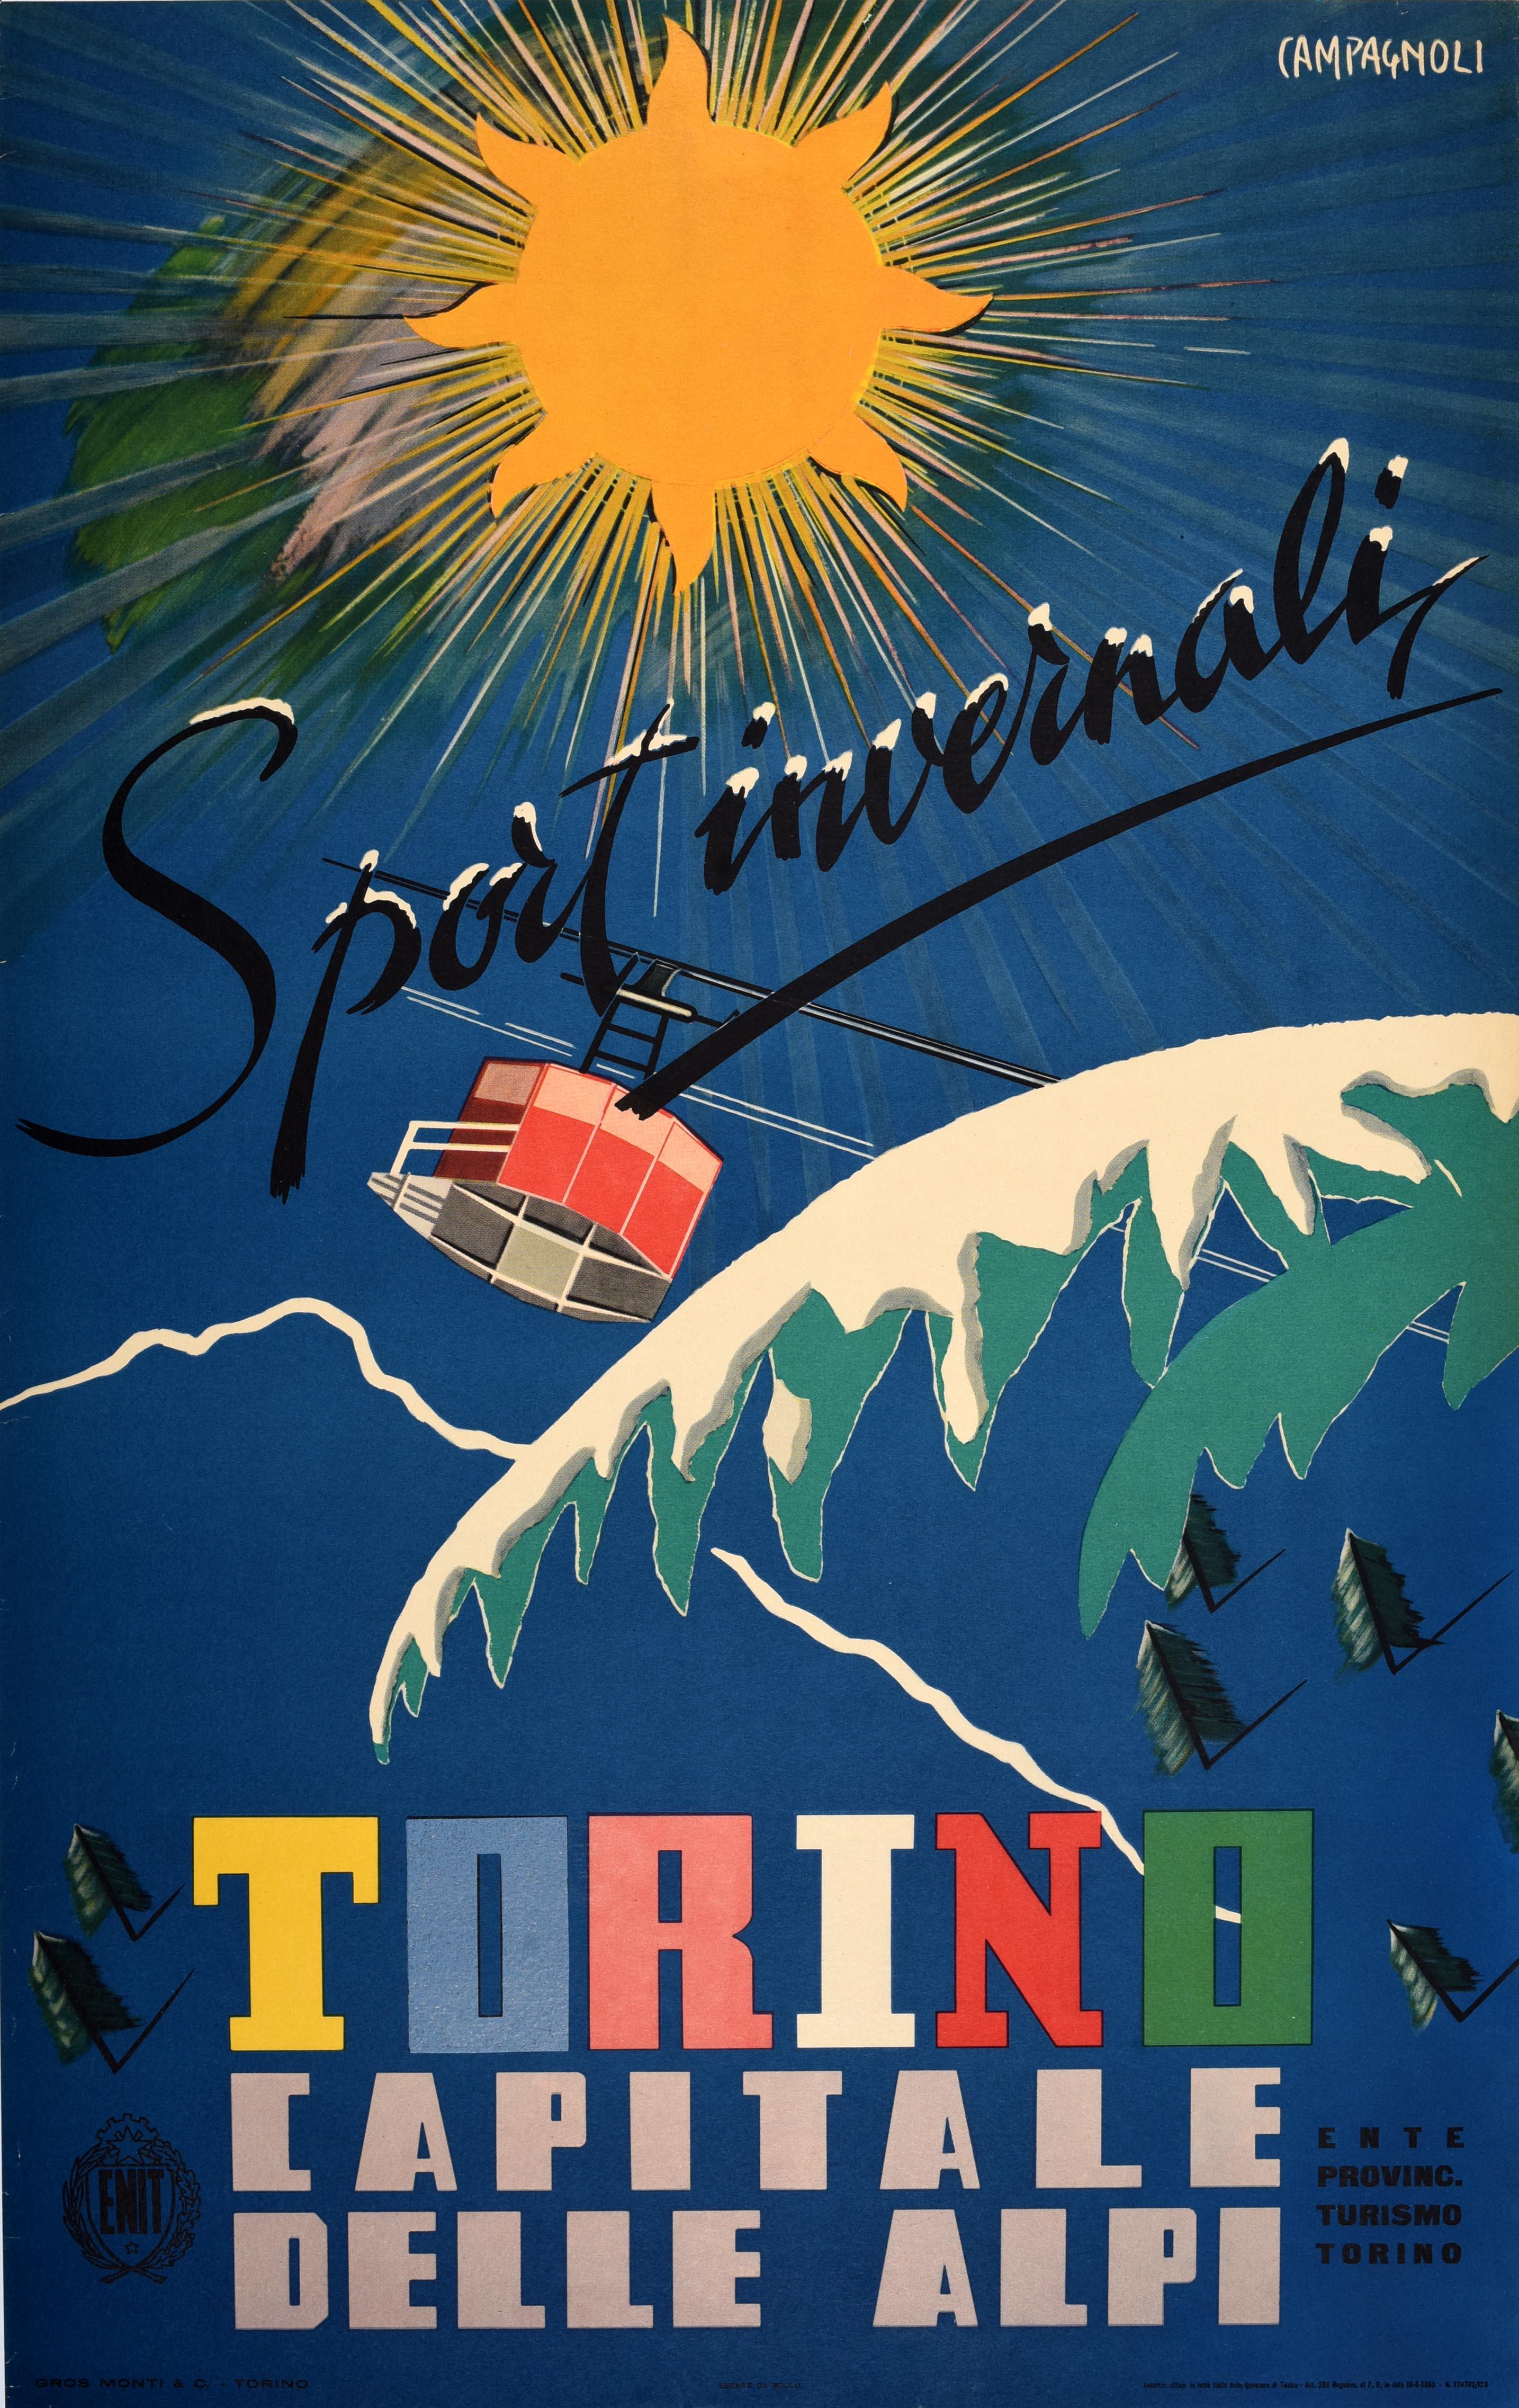 Unknown Print – Original-Vintage-Reiseplakat Torino Alpen Capital, Wintersport, Campagnoli, Italien